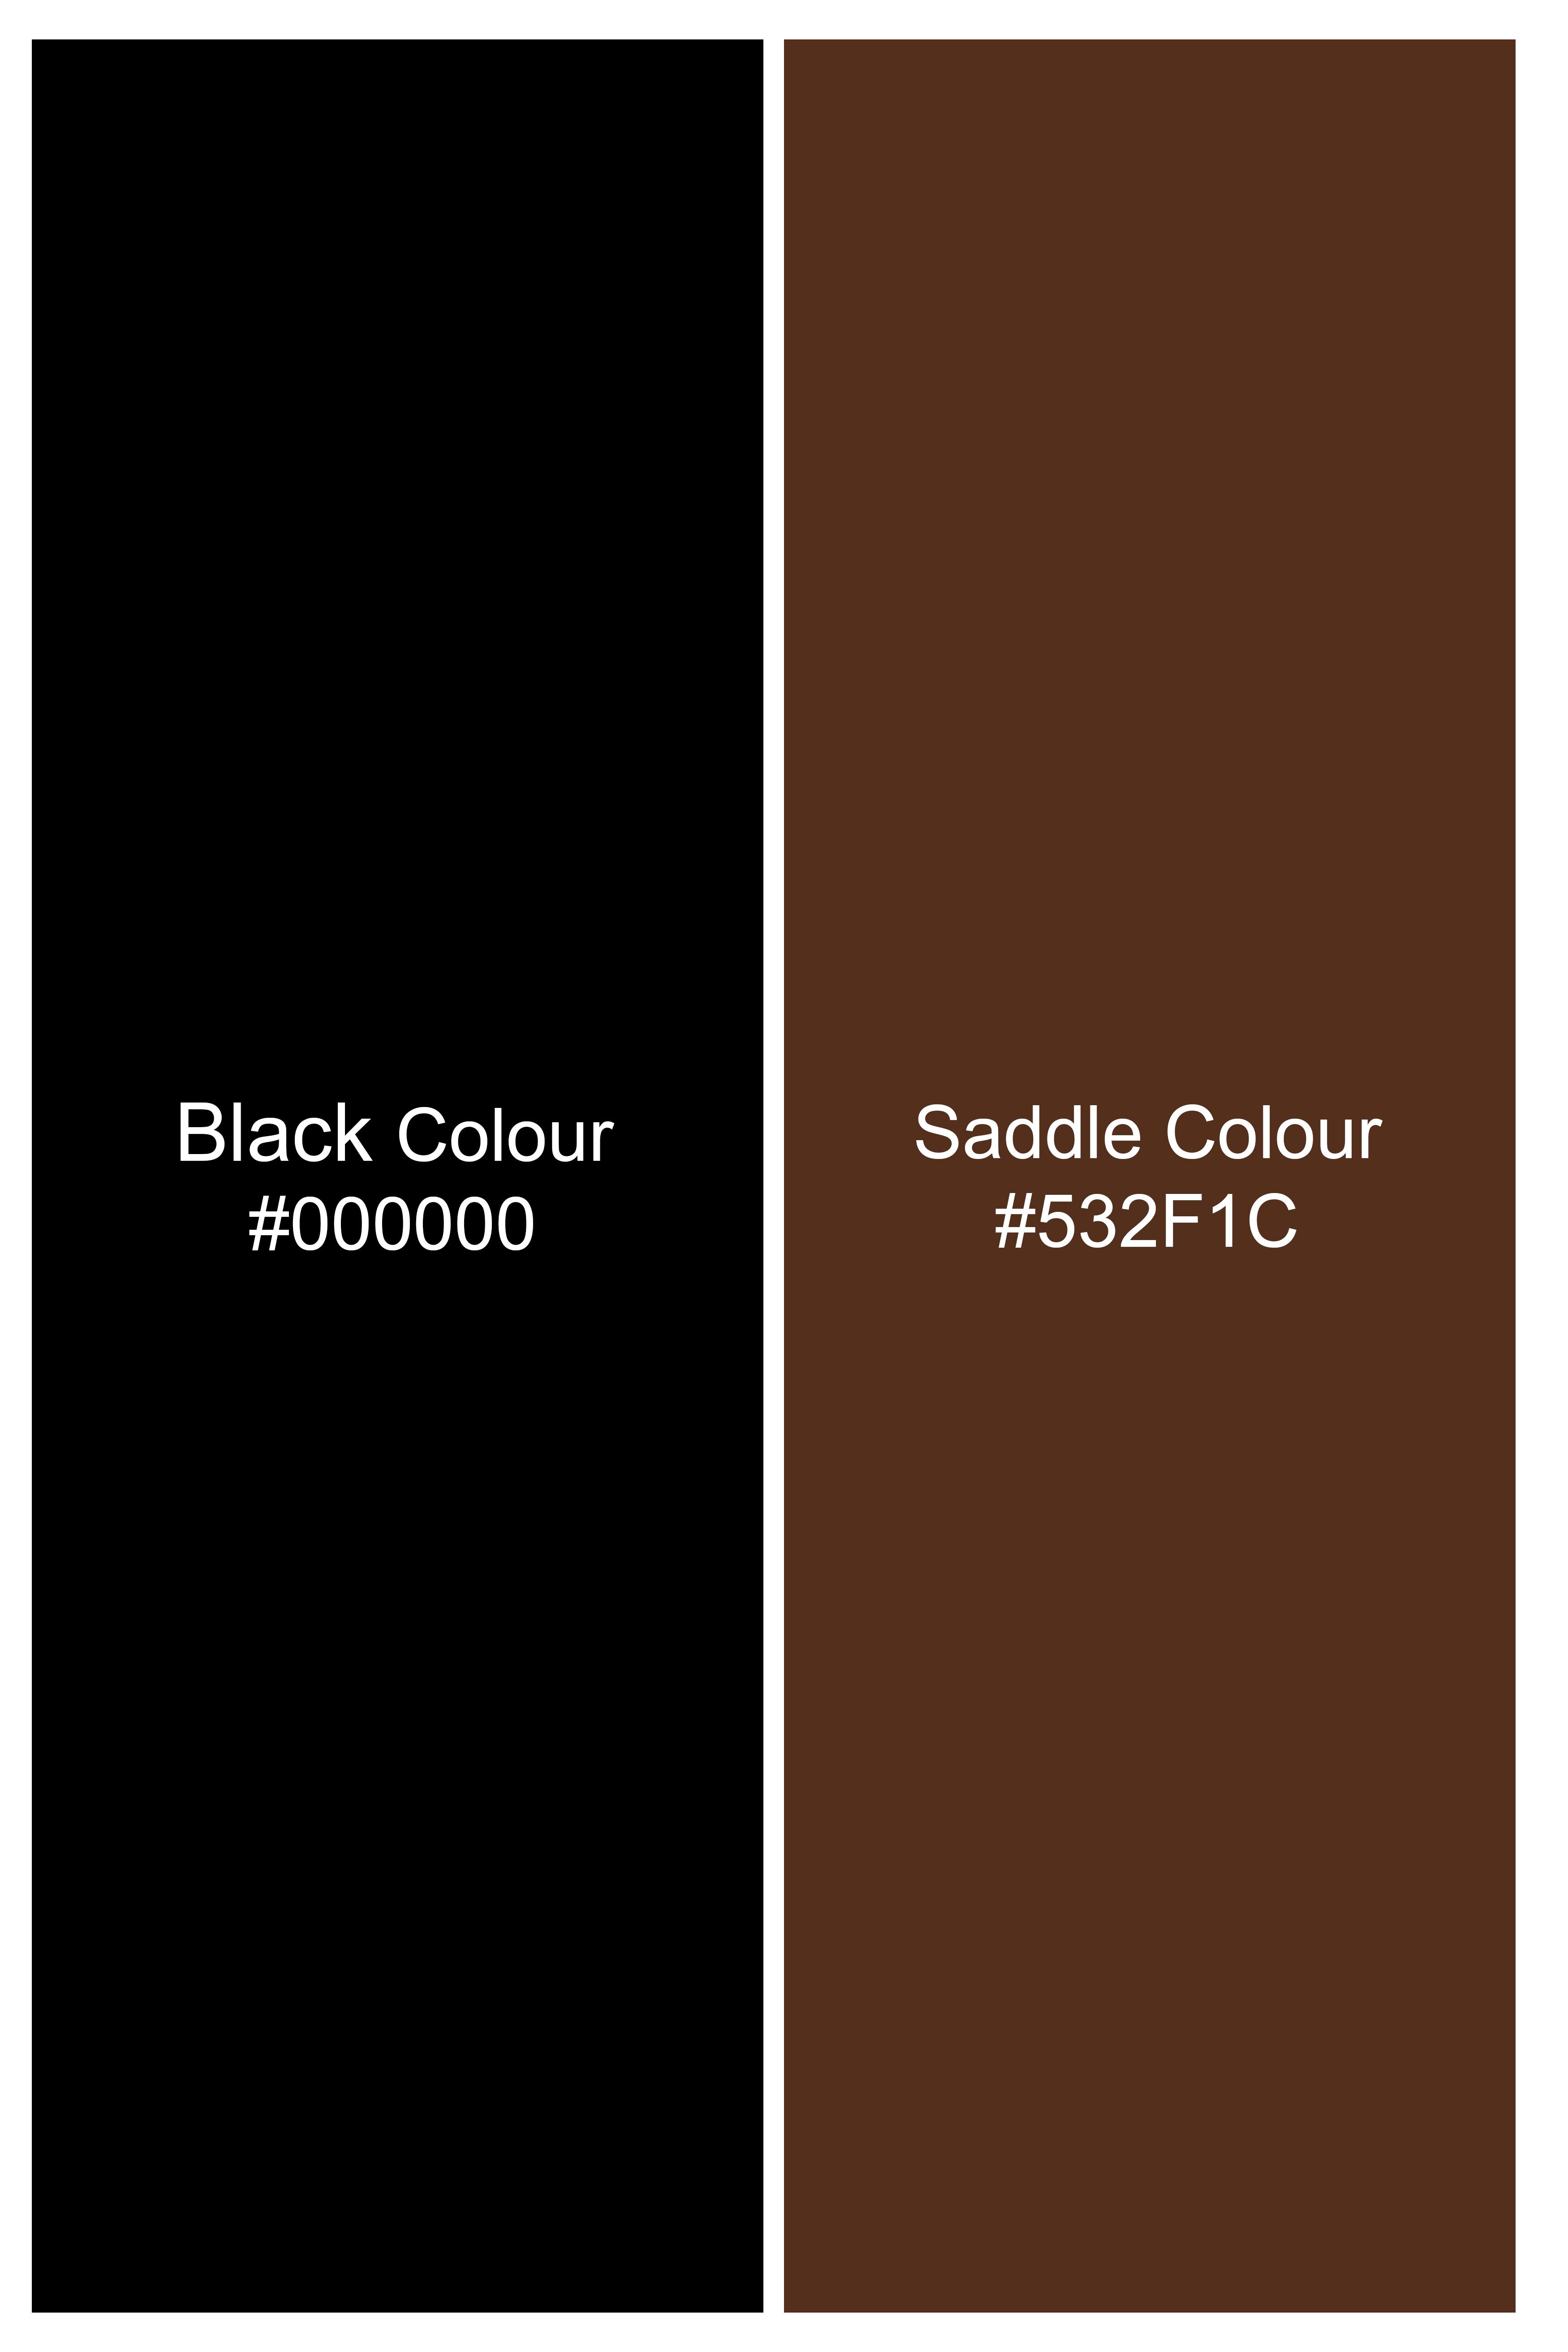 Jade Black and Saddle Brown Windowpane Tweed Trench Coat